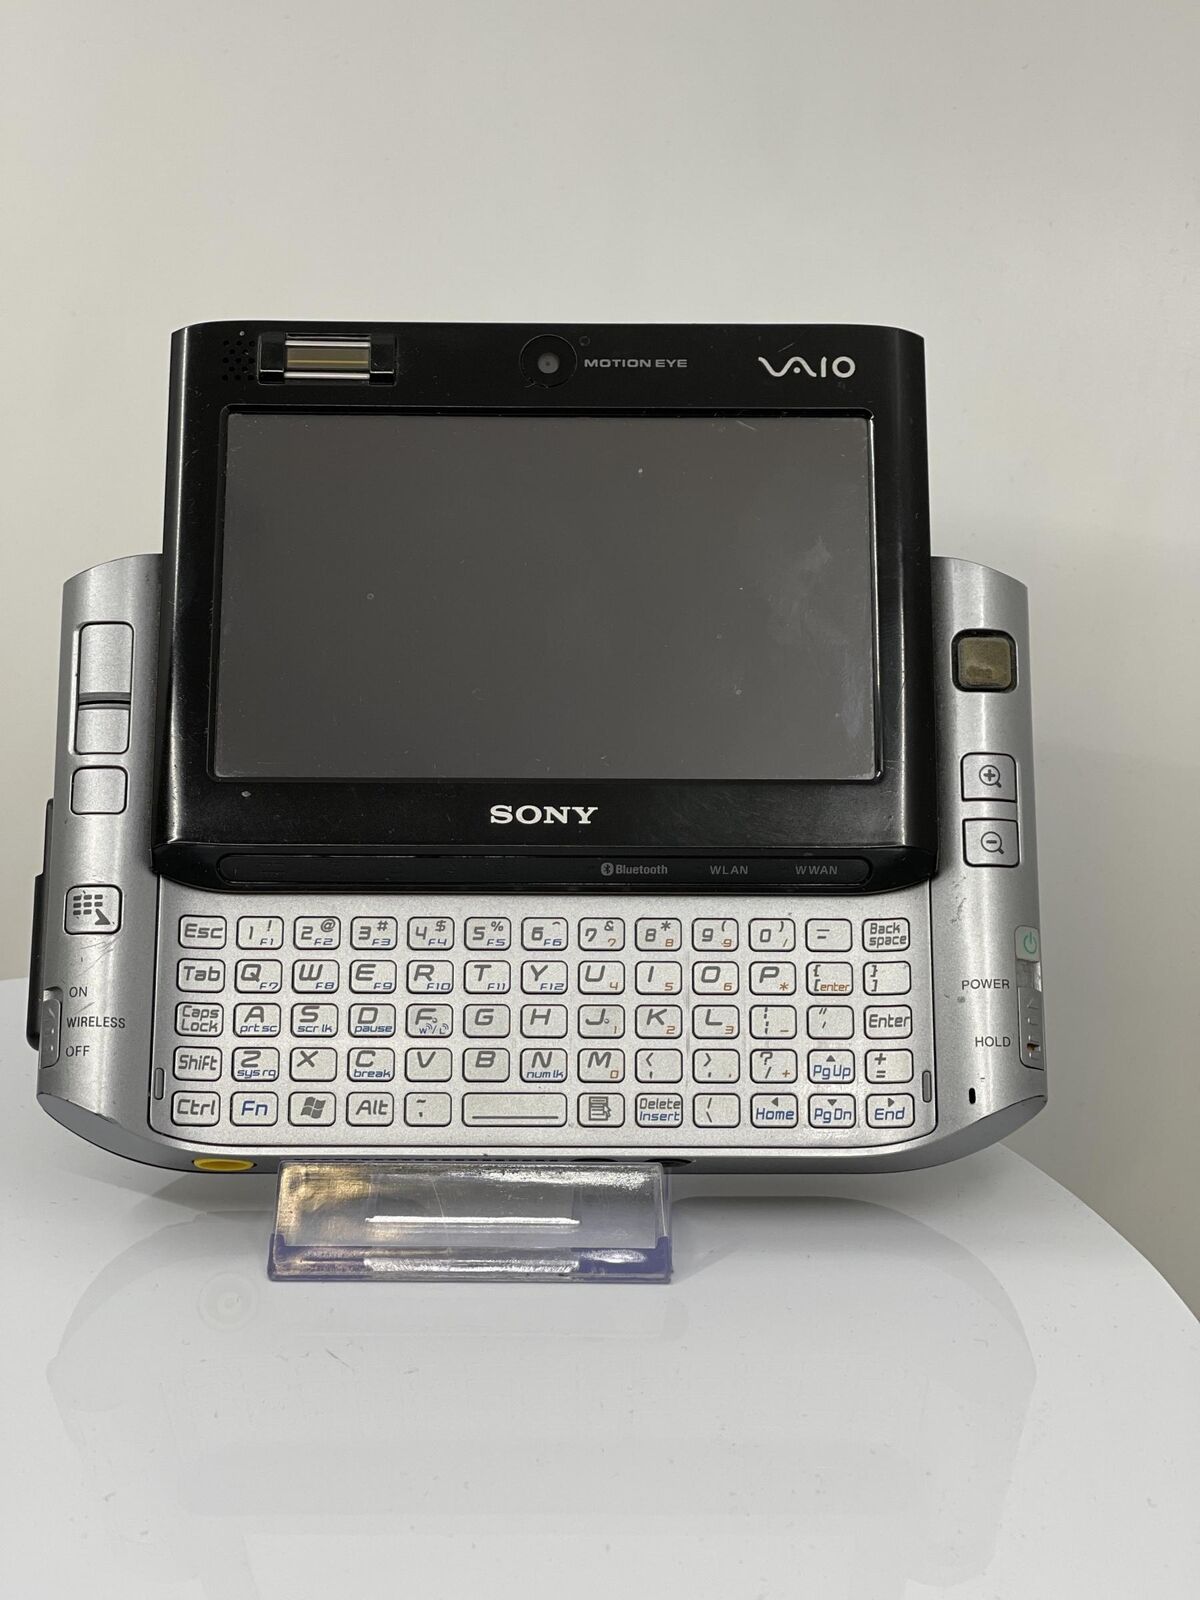 Sony VAIO 4.5-inch Micro Laptop 1GB RAM 40 GB HD (VGN-UX380N)